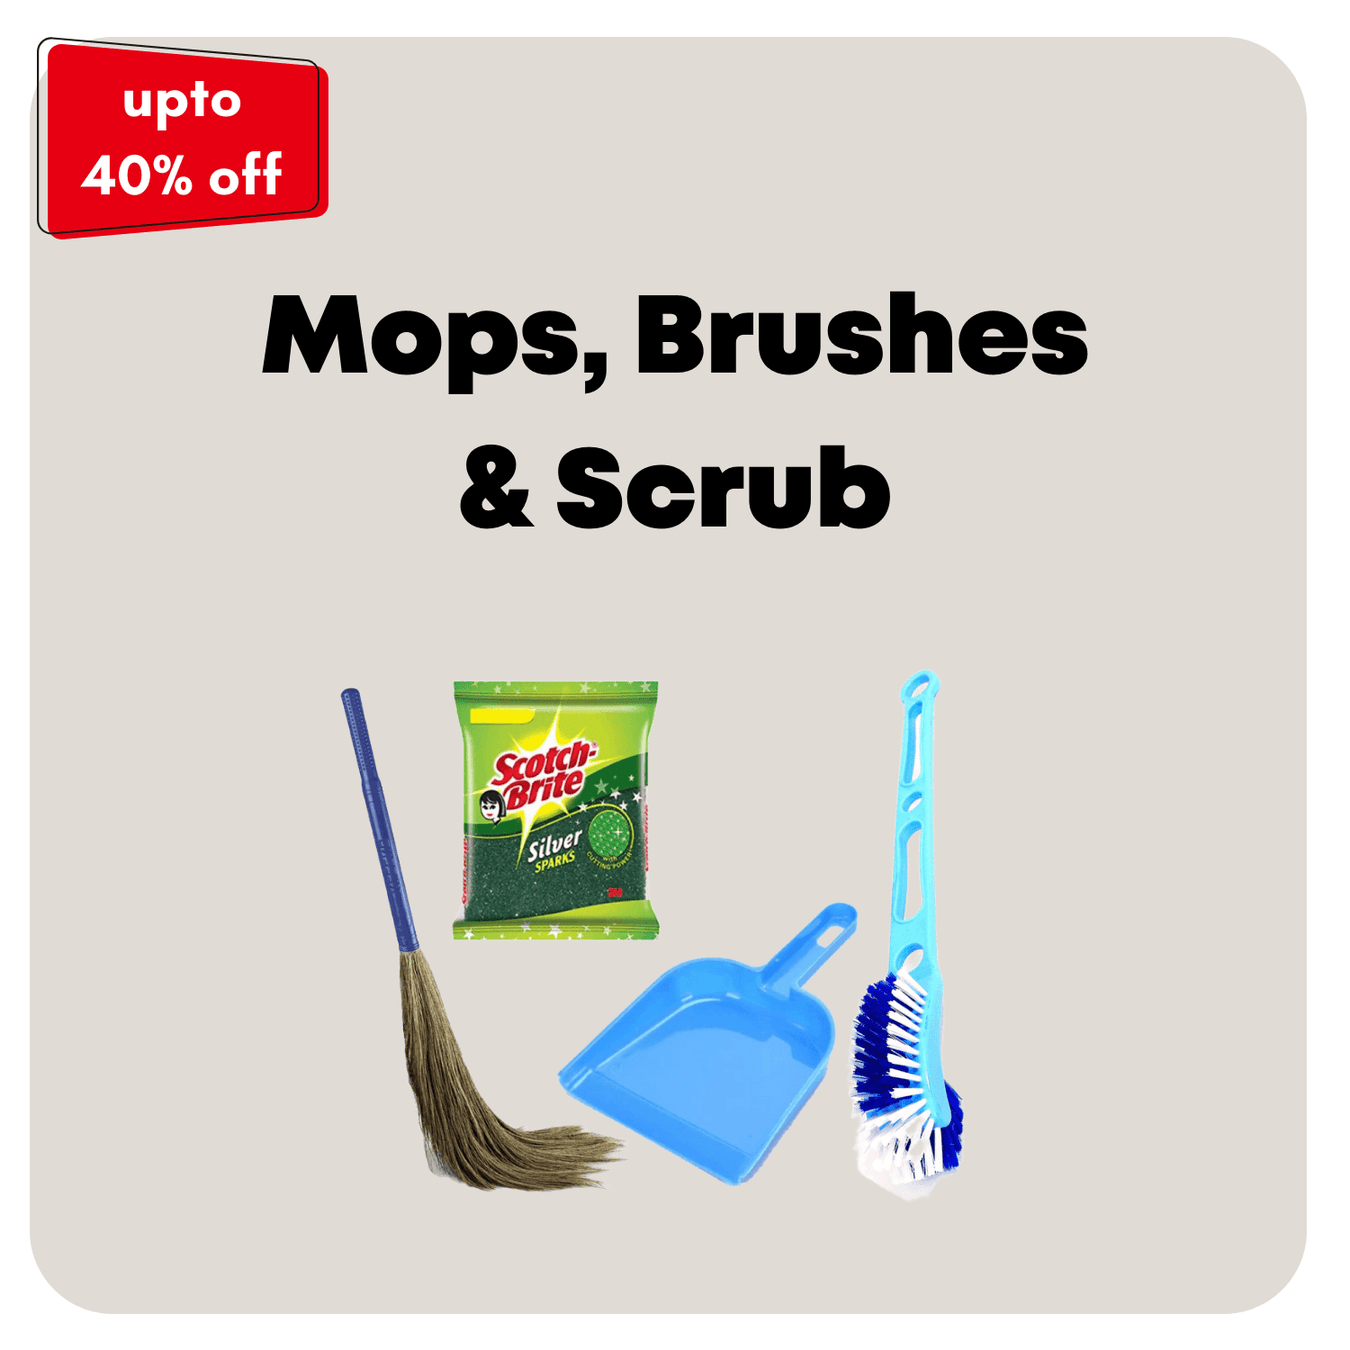 Mops, Brushes & Scrub